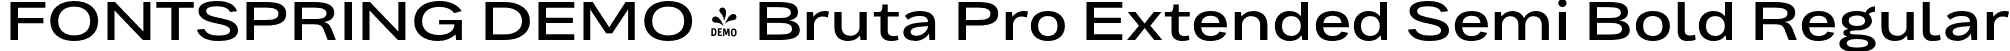 FONTSPRING DEMO - Bruta Pro Extended Semi Bold Regular font | Fontspring-DEMO-brutaproextended-semibold.otf